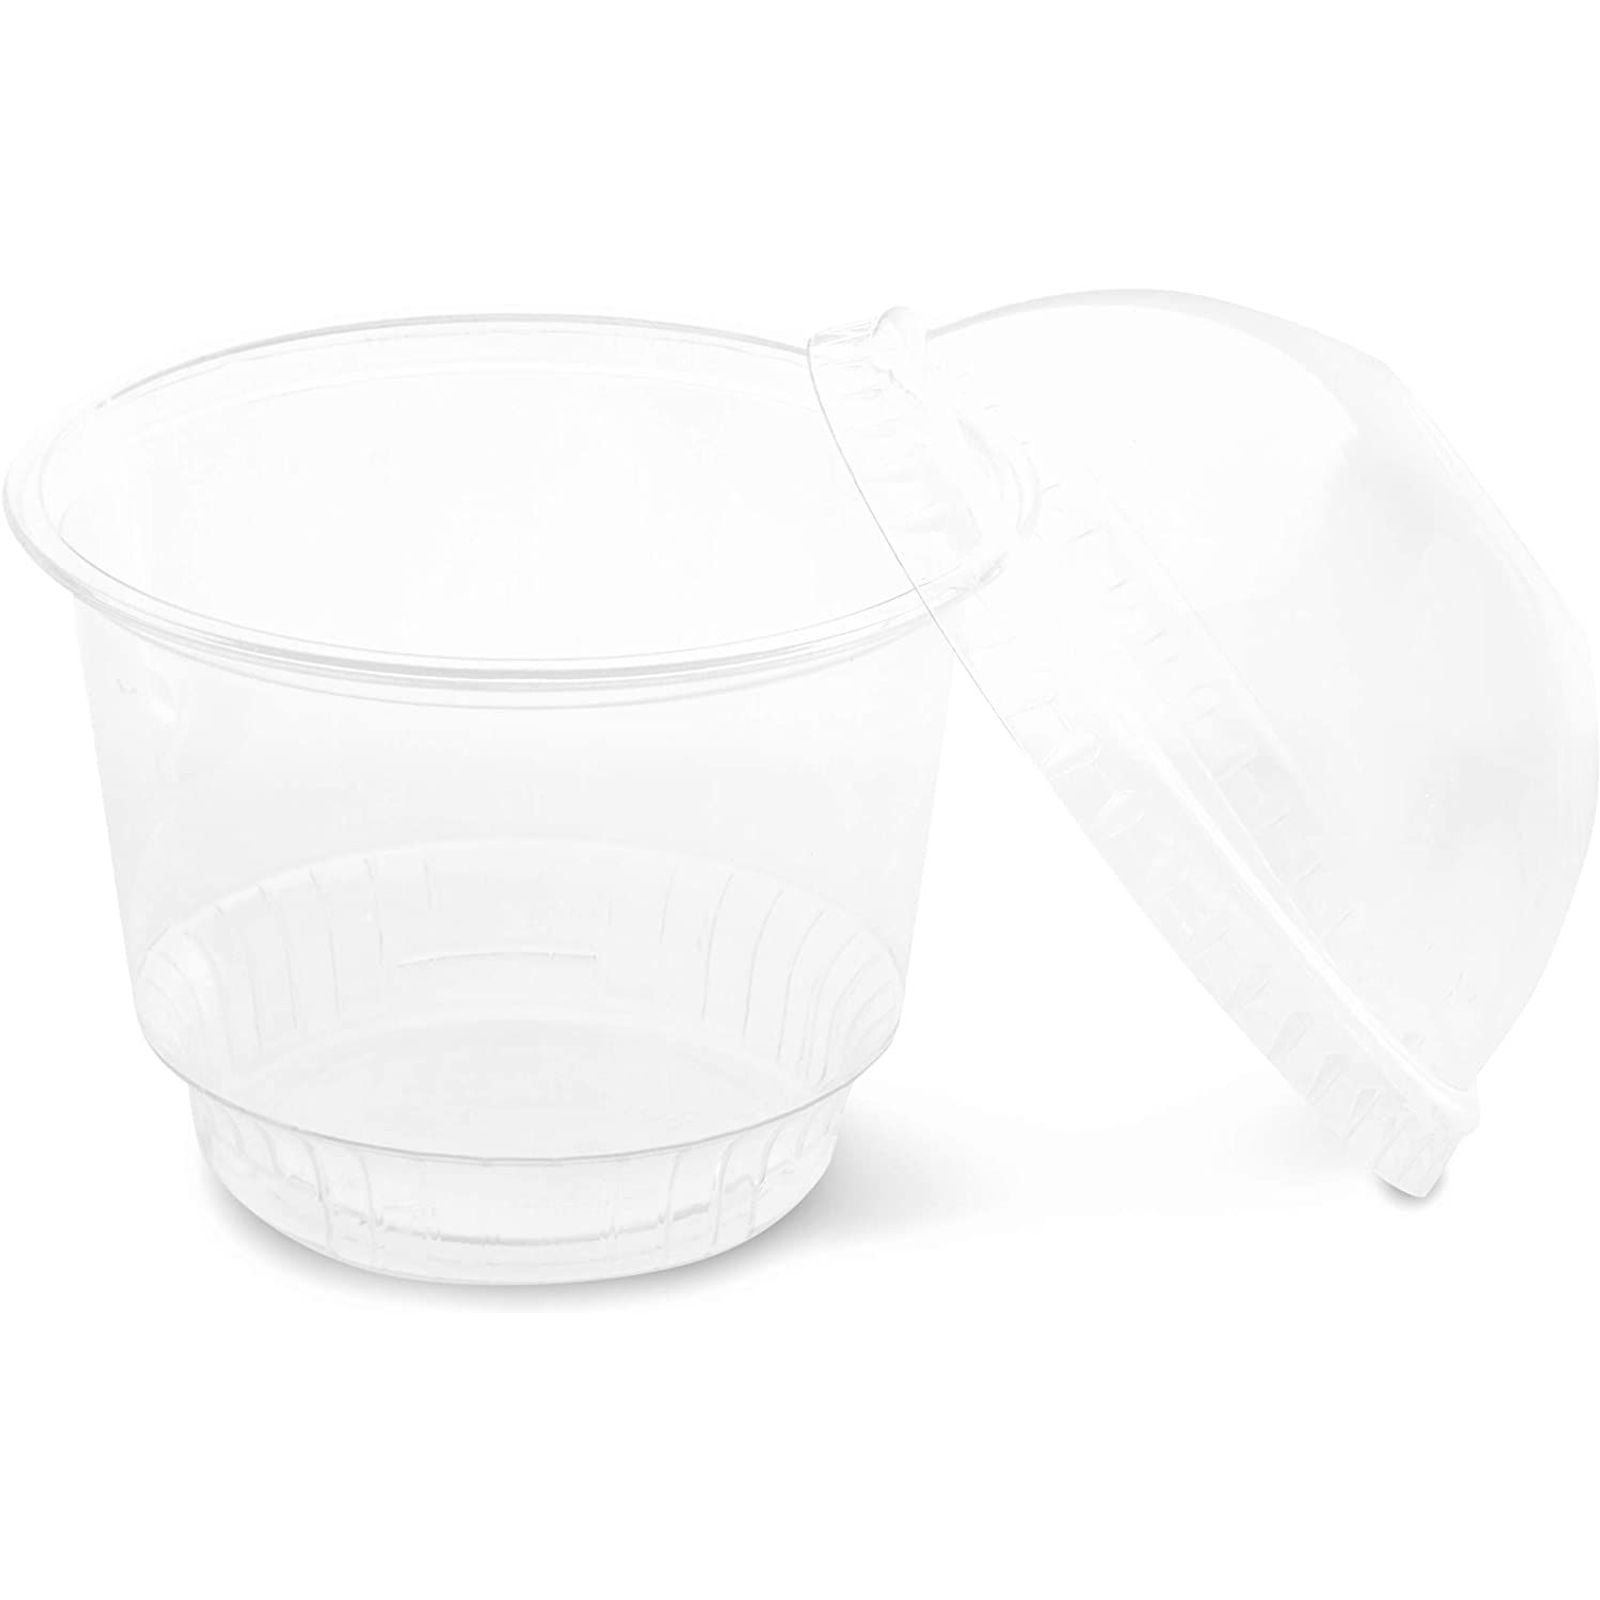 Plastic Dessert Glasses Party Bowls C MATANA 50 Pack Disposable Ice Cream Cups 